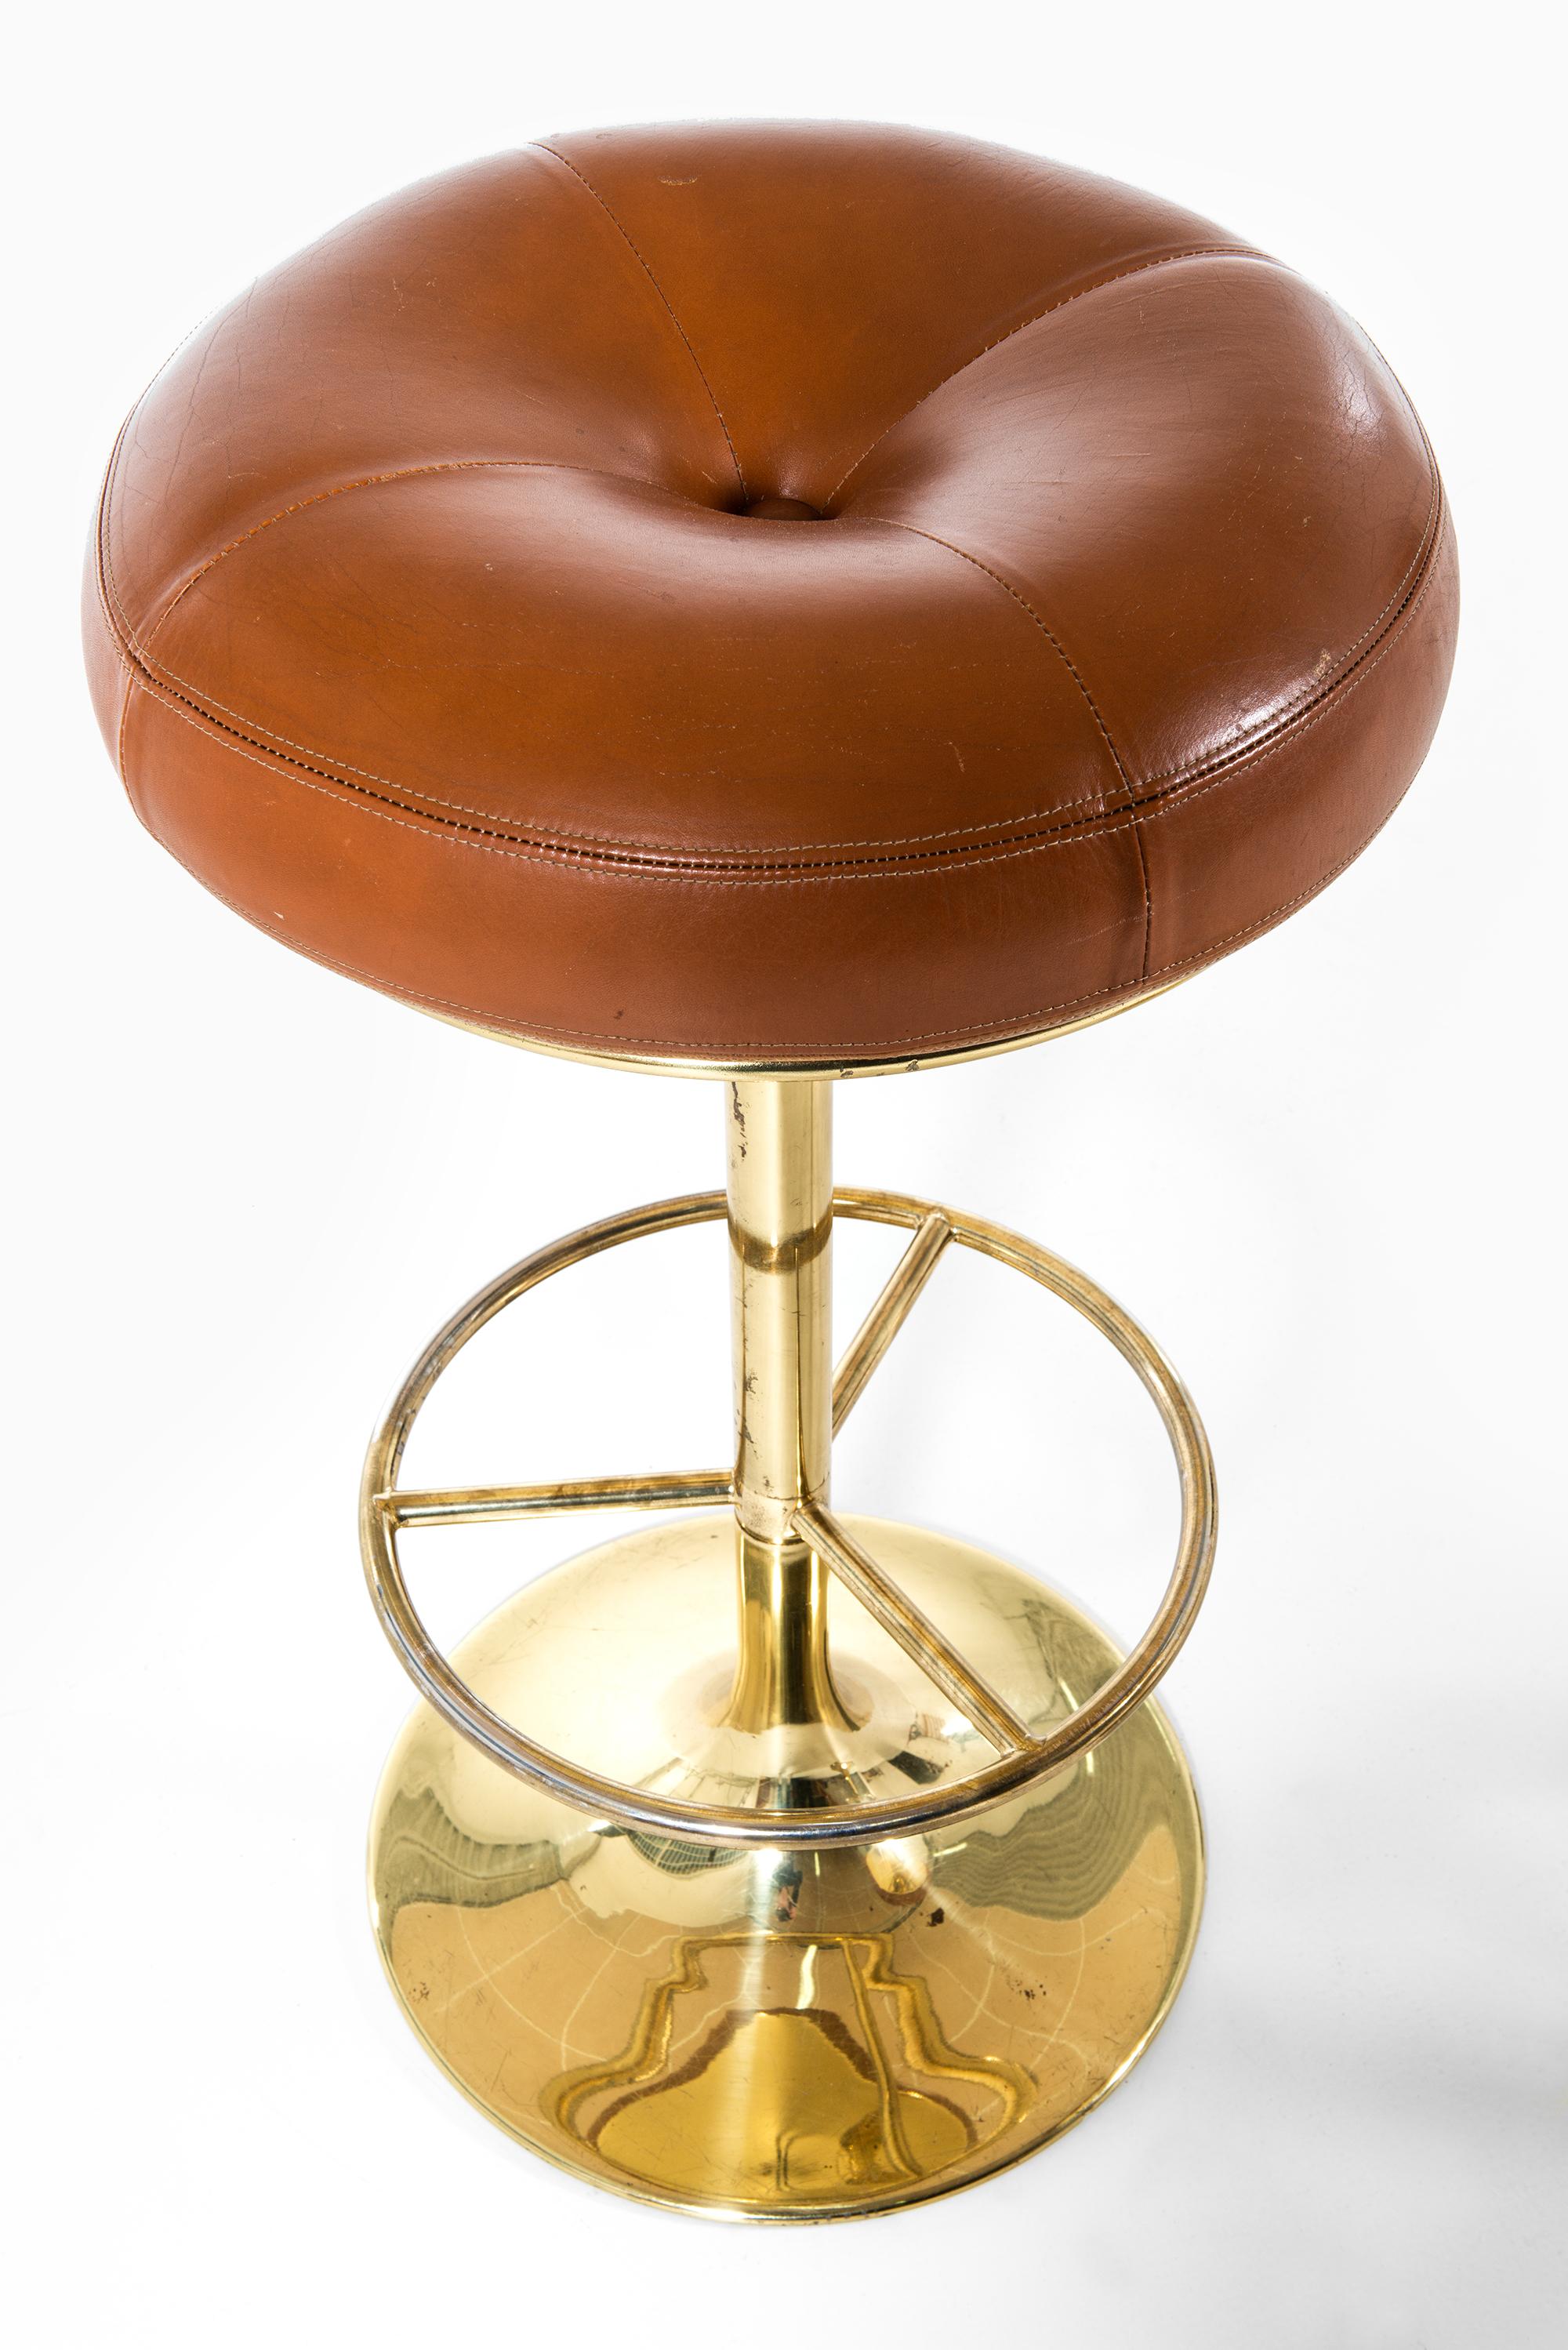 Set of 2 bar stools model Classic designed by Börje Johansson. Produced by Johansson design in Markaryd, Sweden.